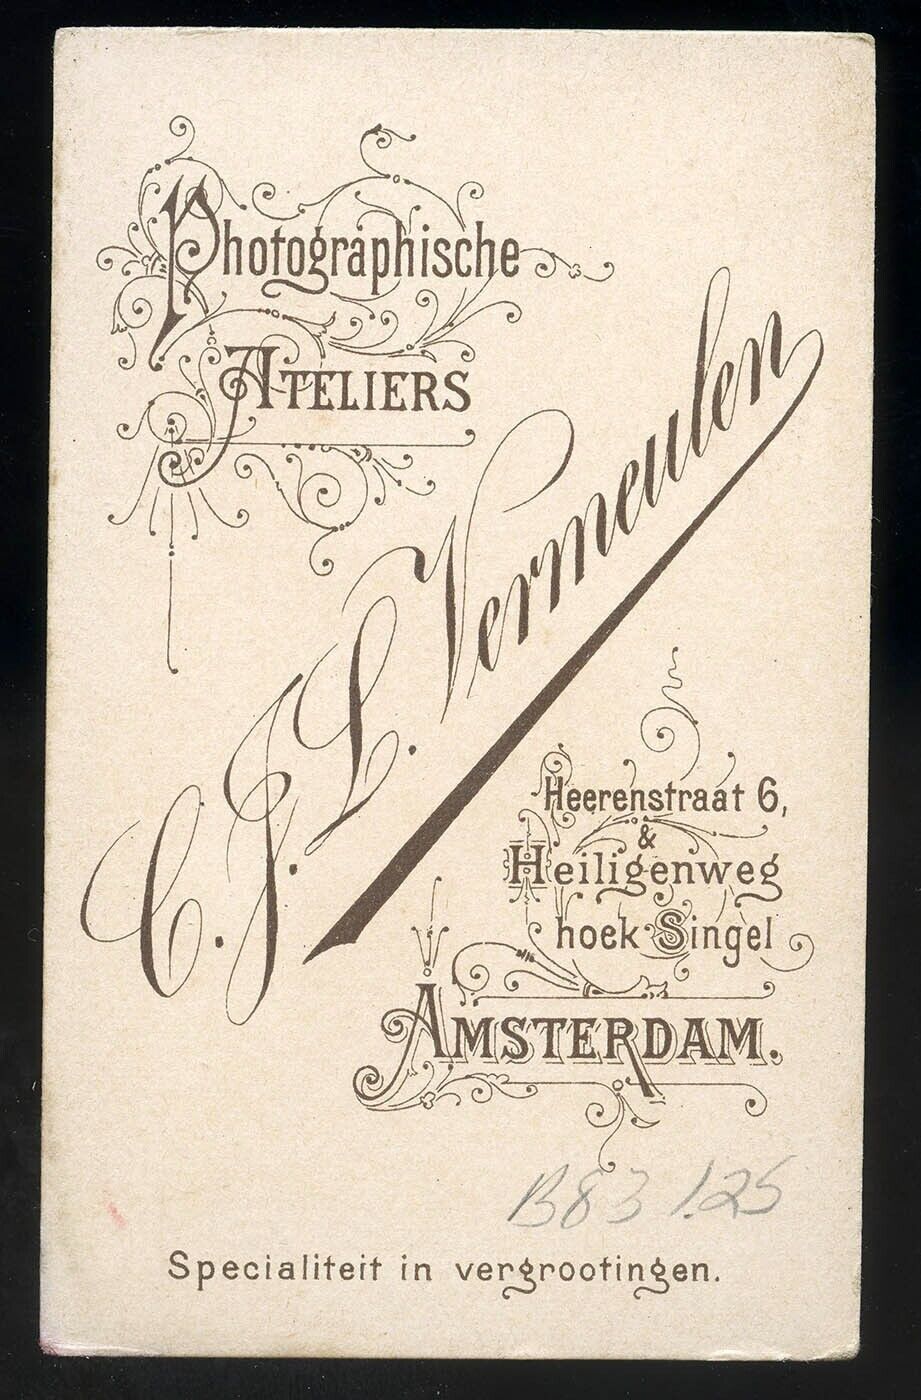 1880s  CDV  C.J.L. Vermeulen Photographer - Amsterdam, Netherlands